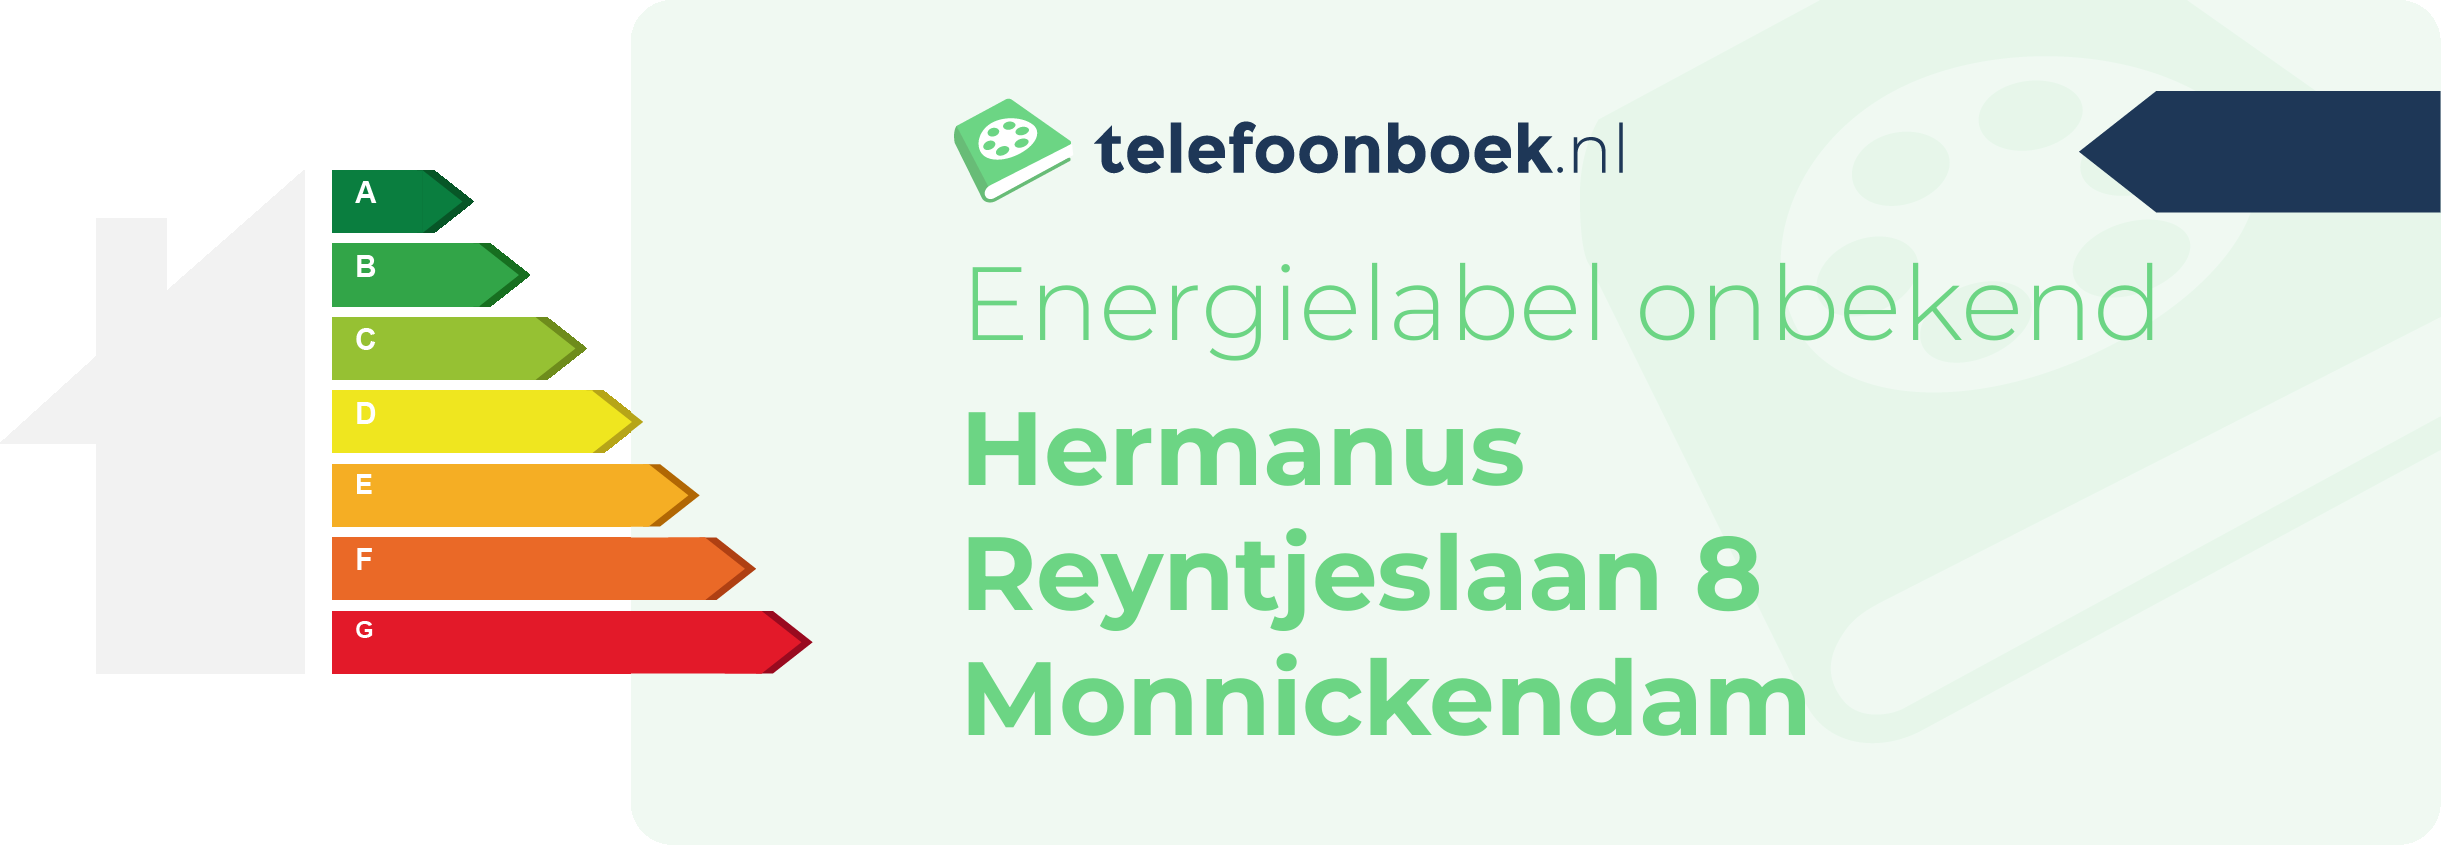 Energielabel Hermanus Reyntjeslaan 8 Monnickendam